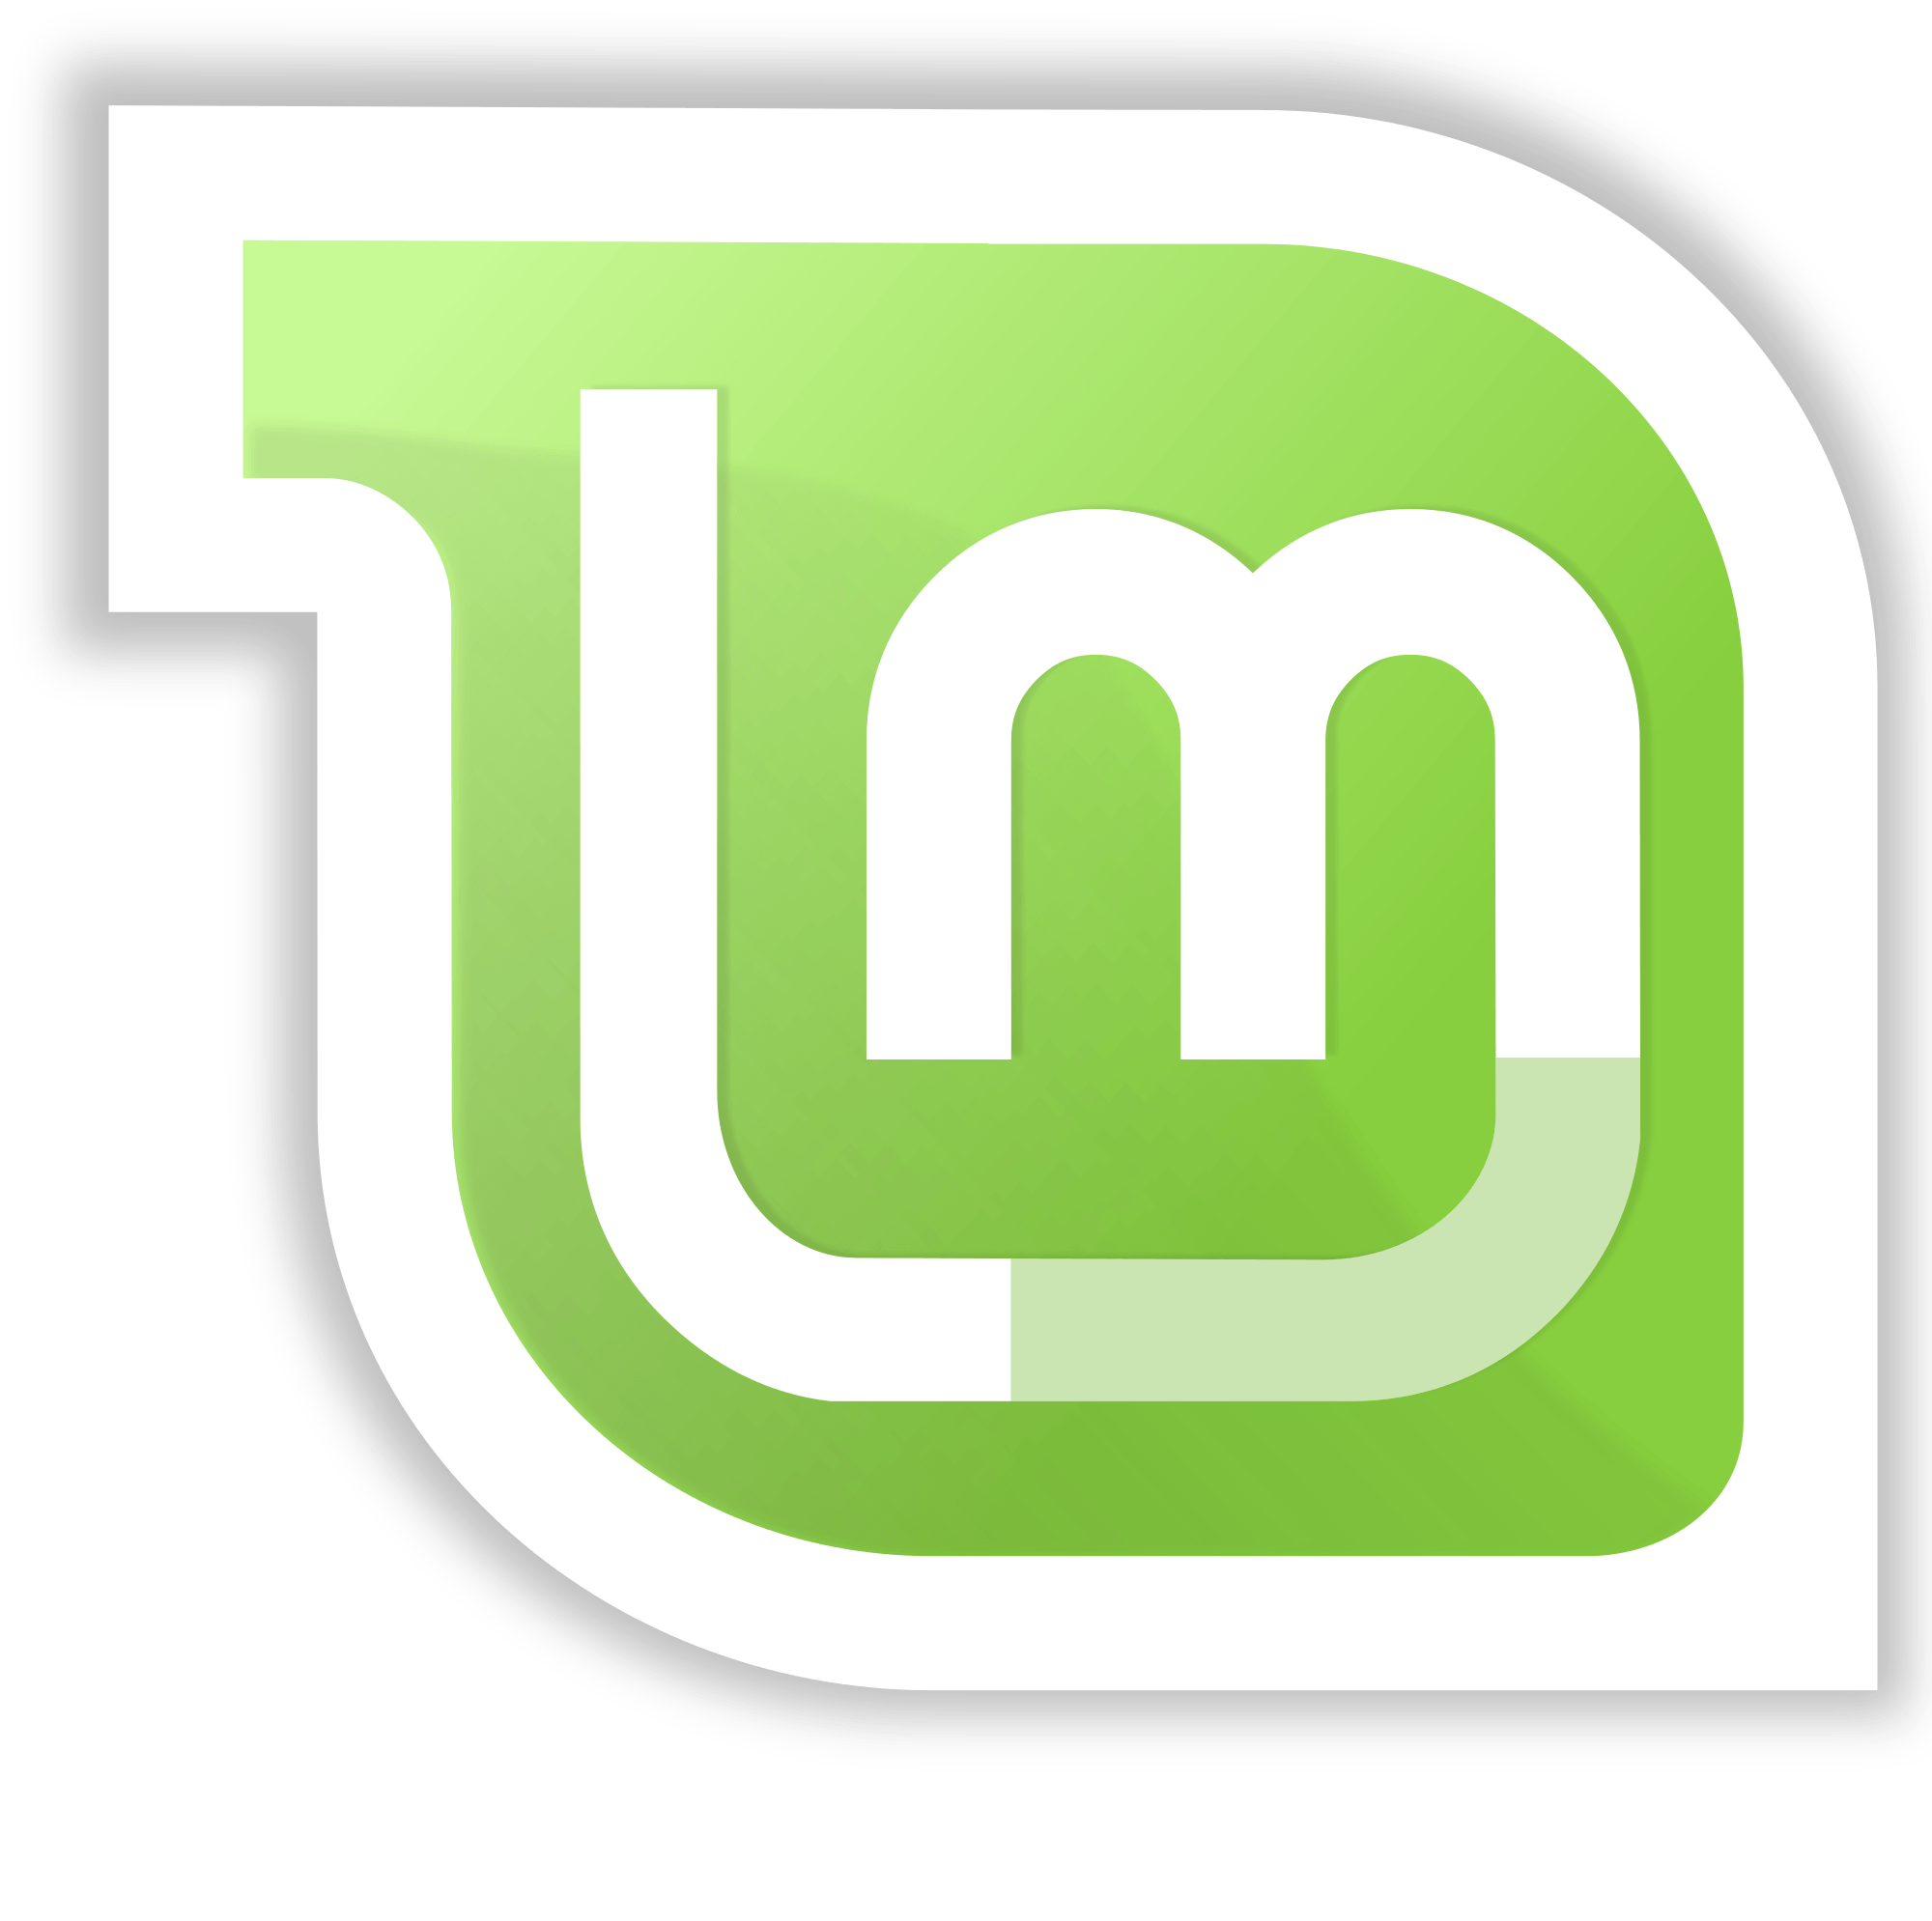 Mint Logo - File:Linux Mint logo without wordmark.svg - Wikimedia Commons